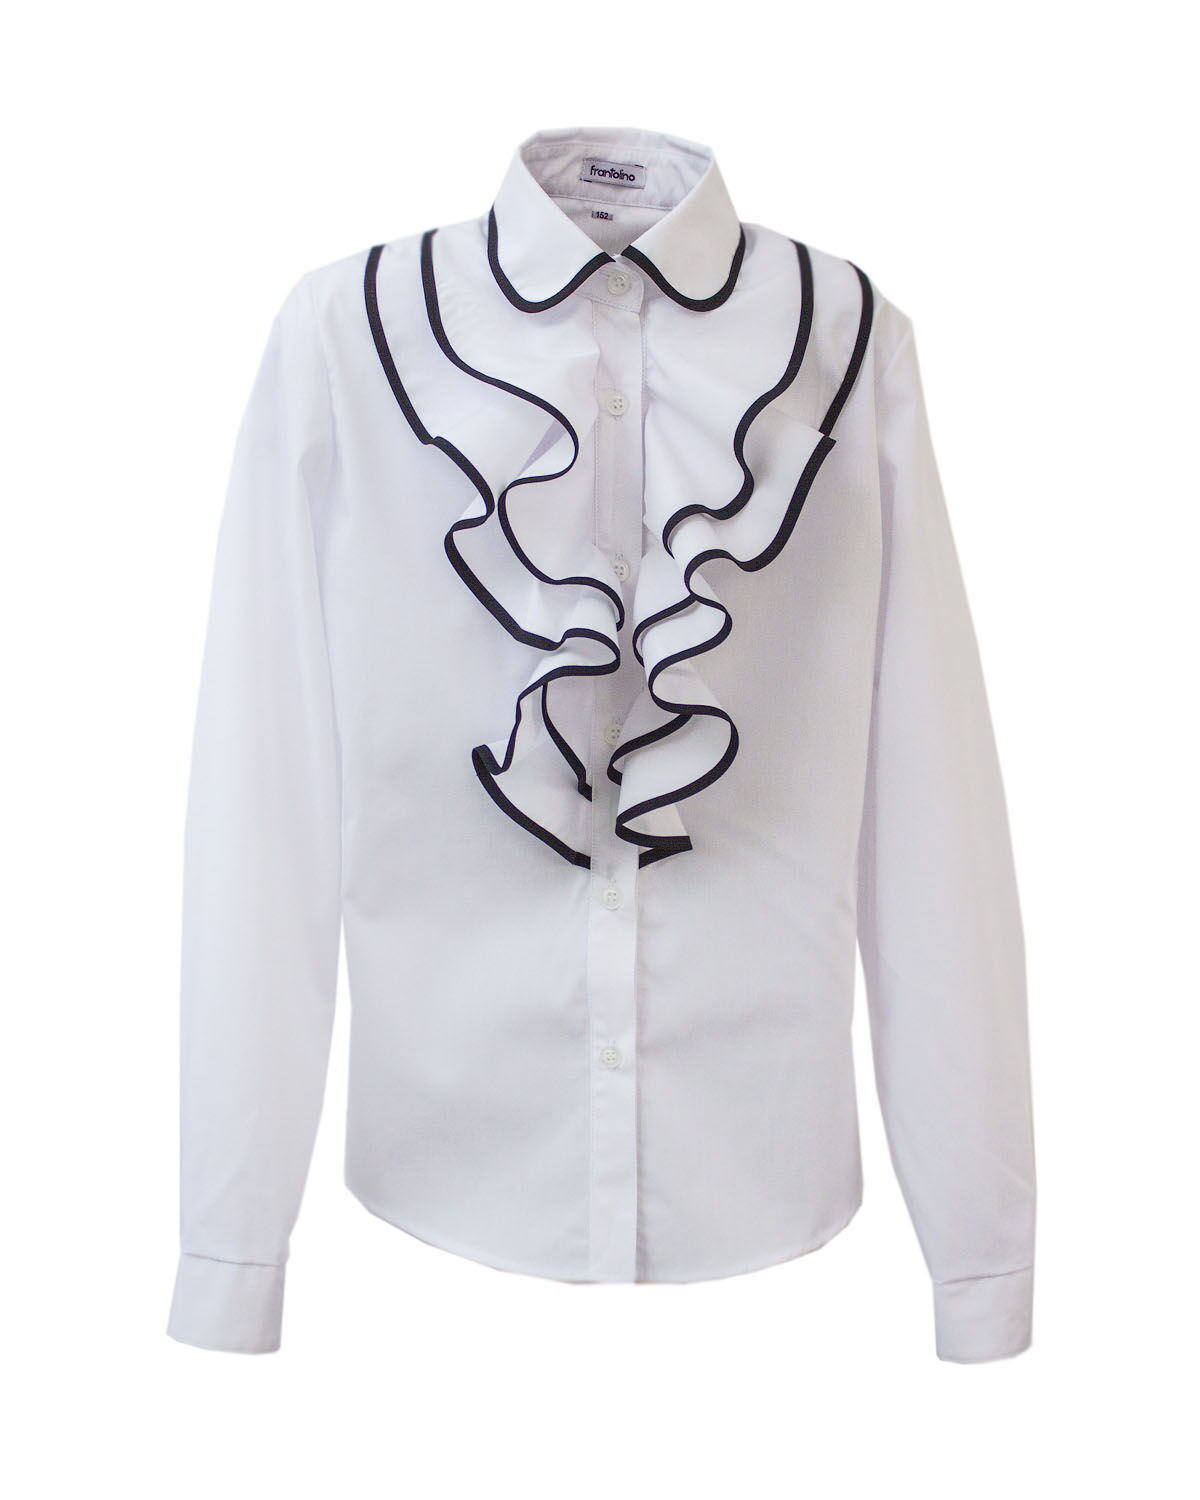 Блуза с воланами Frantolino белая 1205-001 - цена